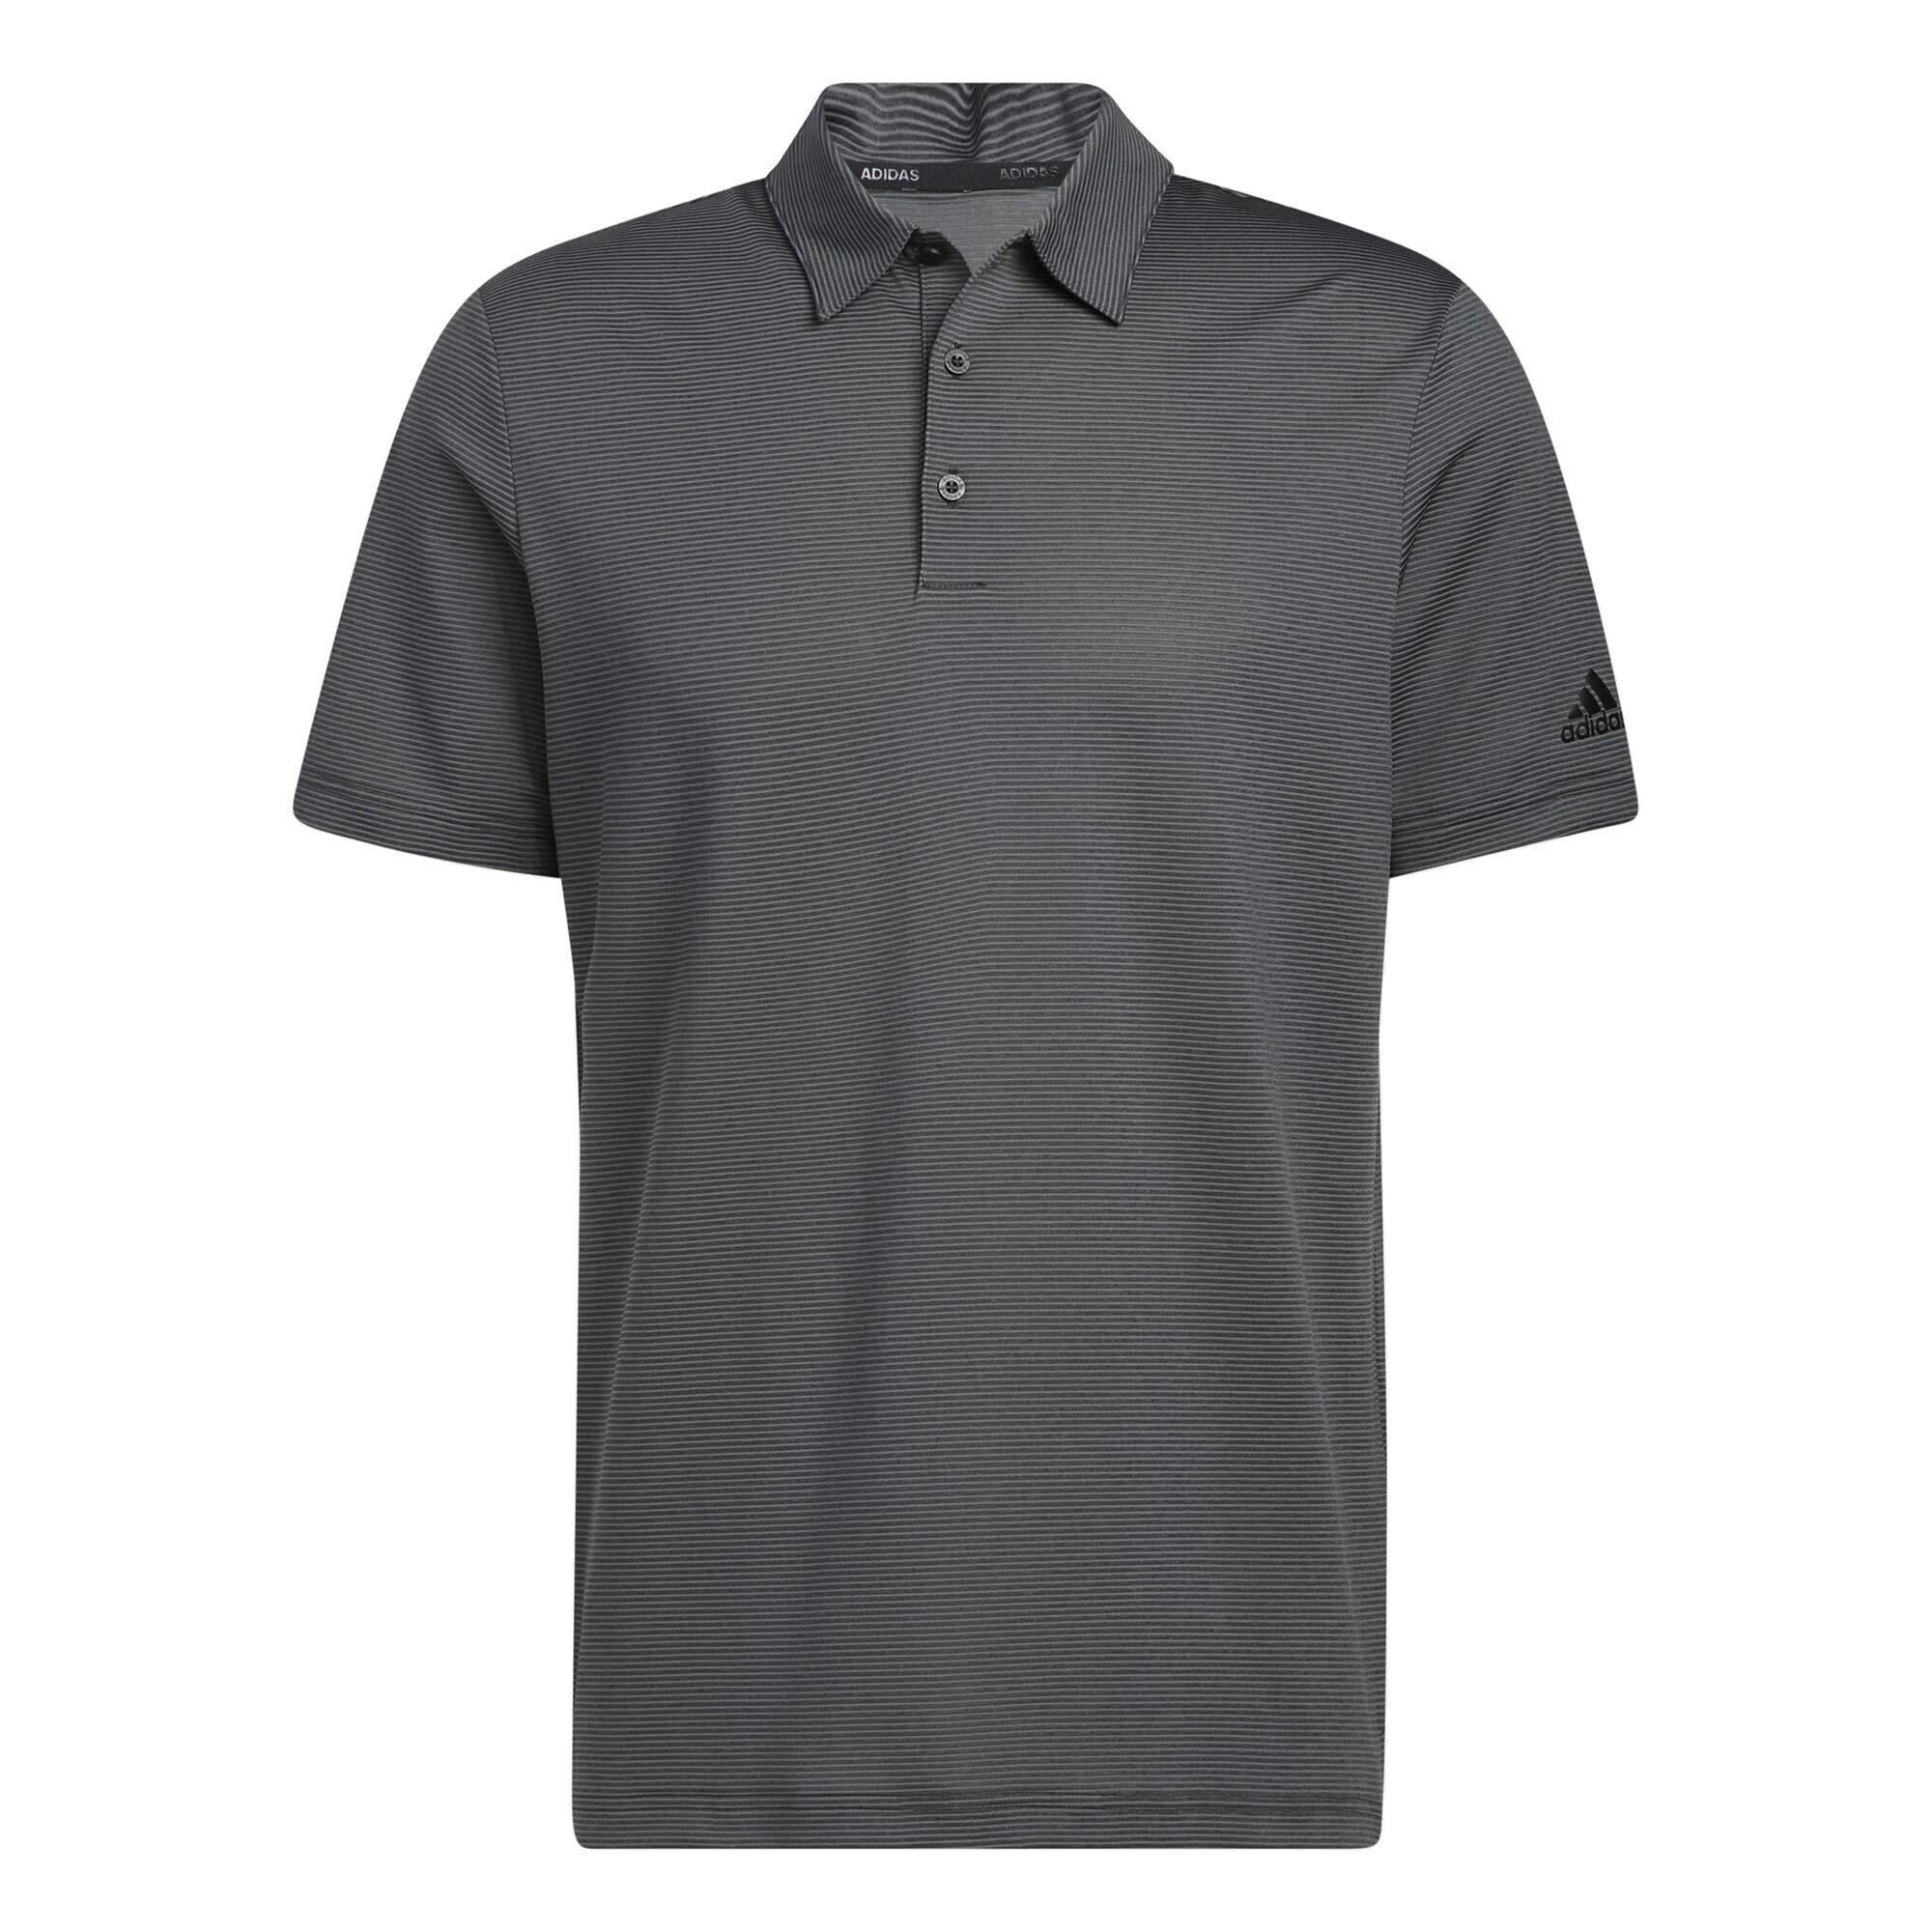 ADIDAS Ottoman Stripe Golf Polo Shirt